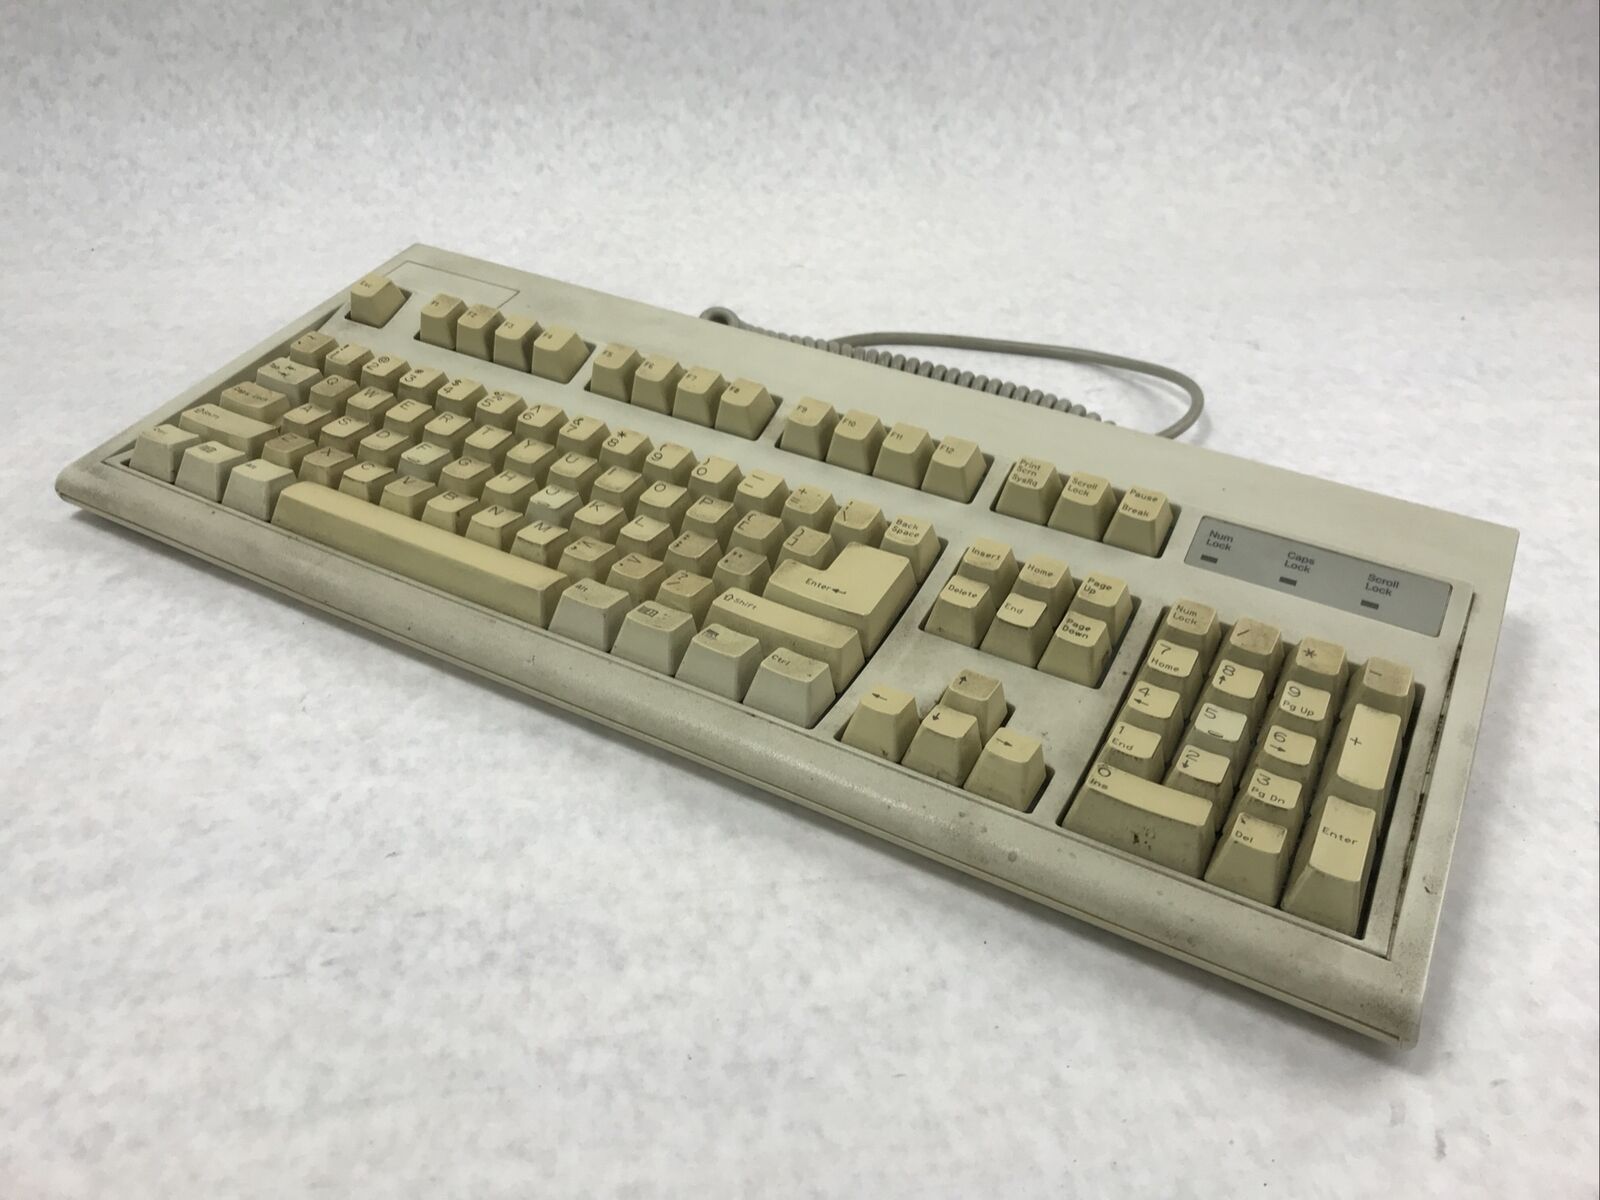 Vintage KeyTronic PS/2 Clicky Keyboard E03601QUS201-C 104 Key